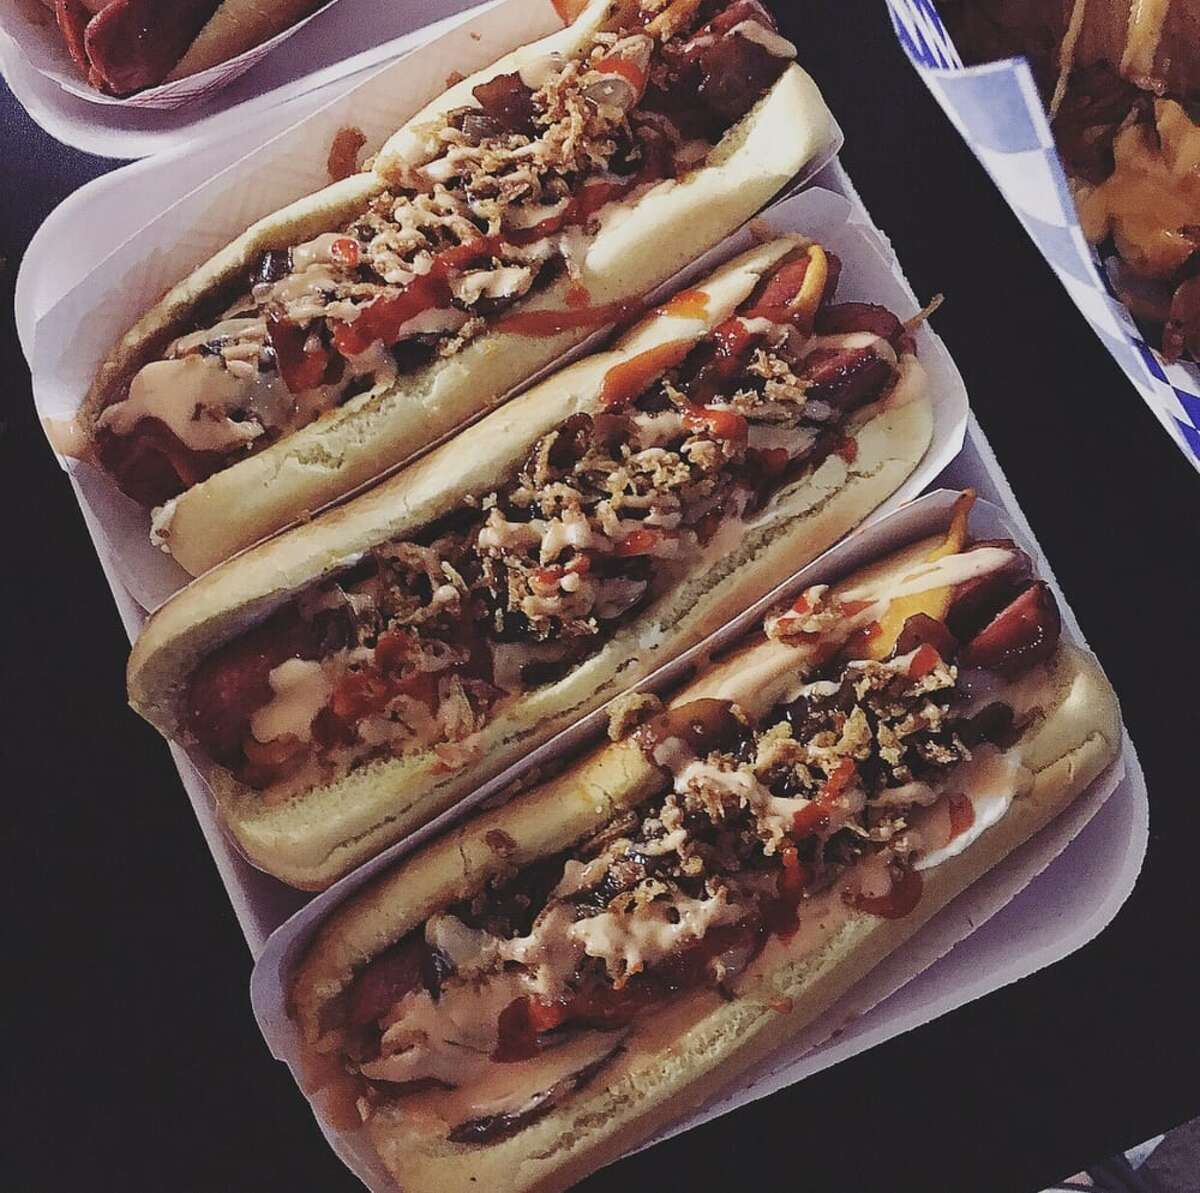 Place name: Yoyo's Hot DogsYelp ranking: 83Location: Houston, Texas Photo: Susan L. /Yelp